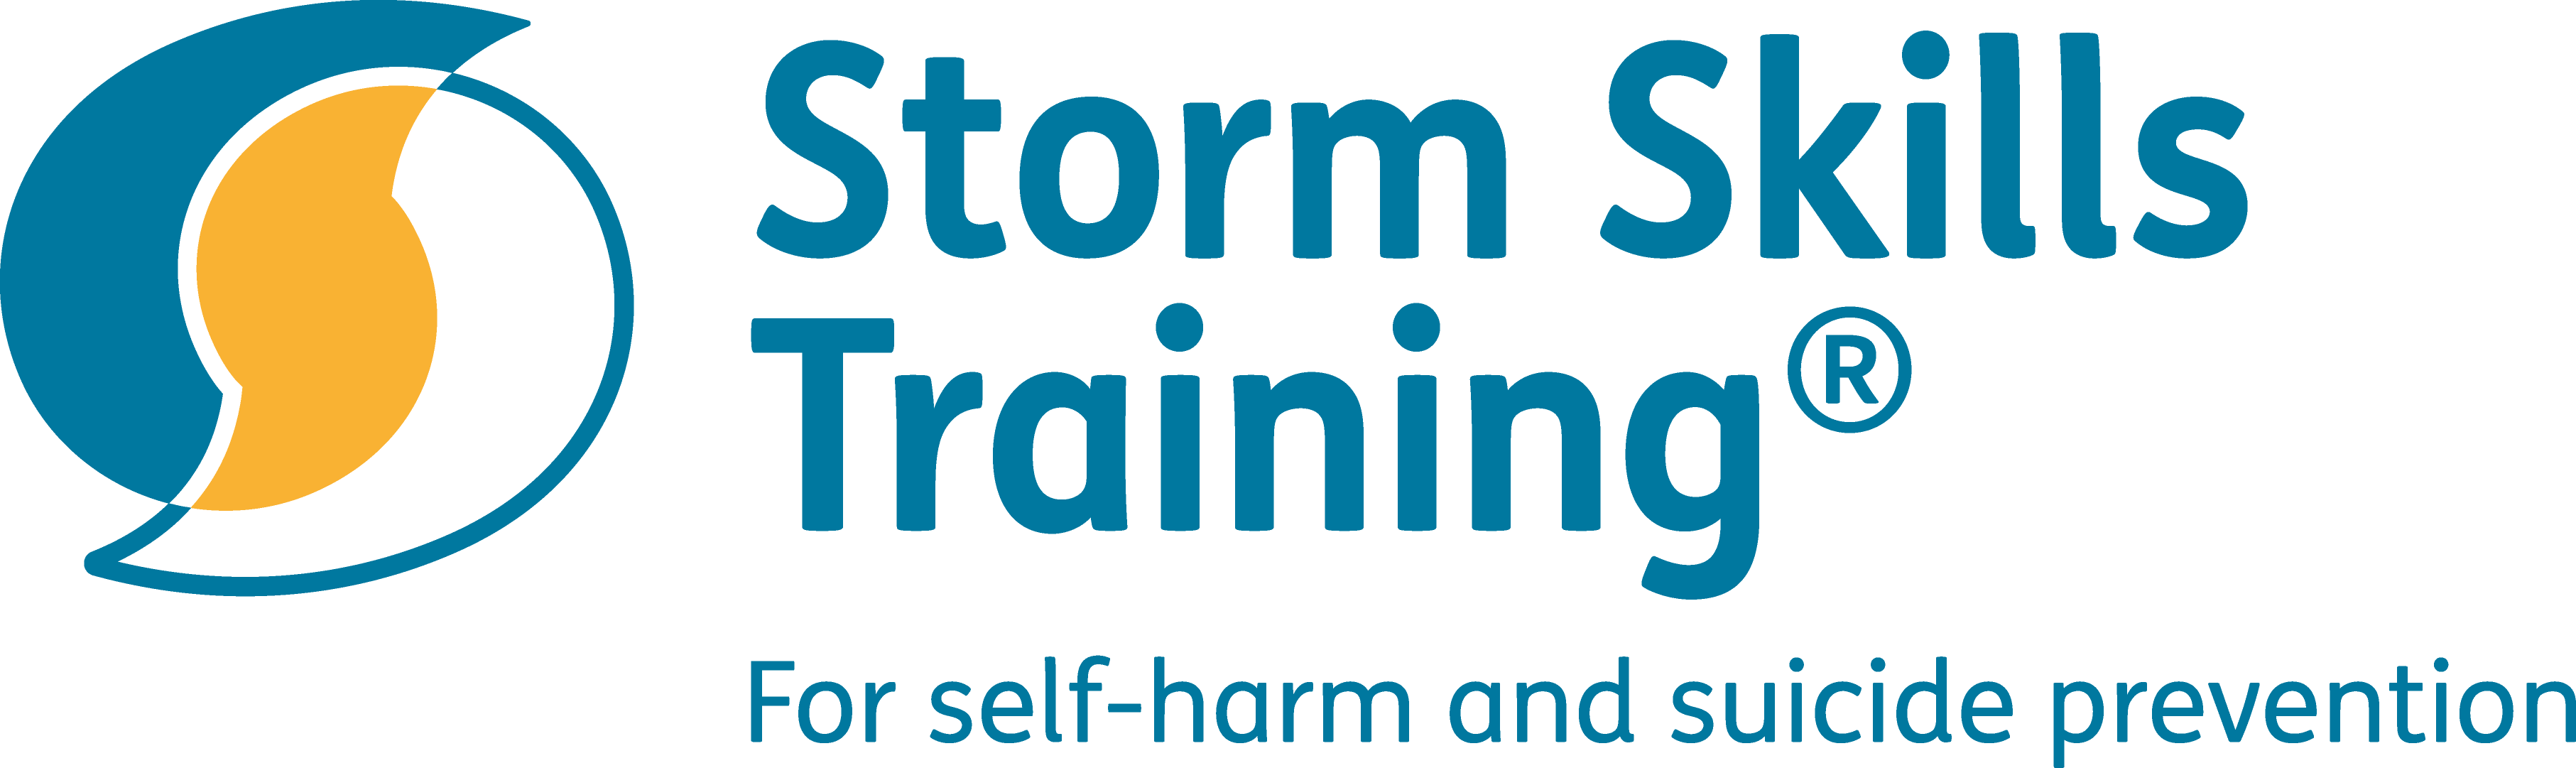 logo for Storm Skills Training CIC